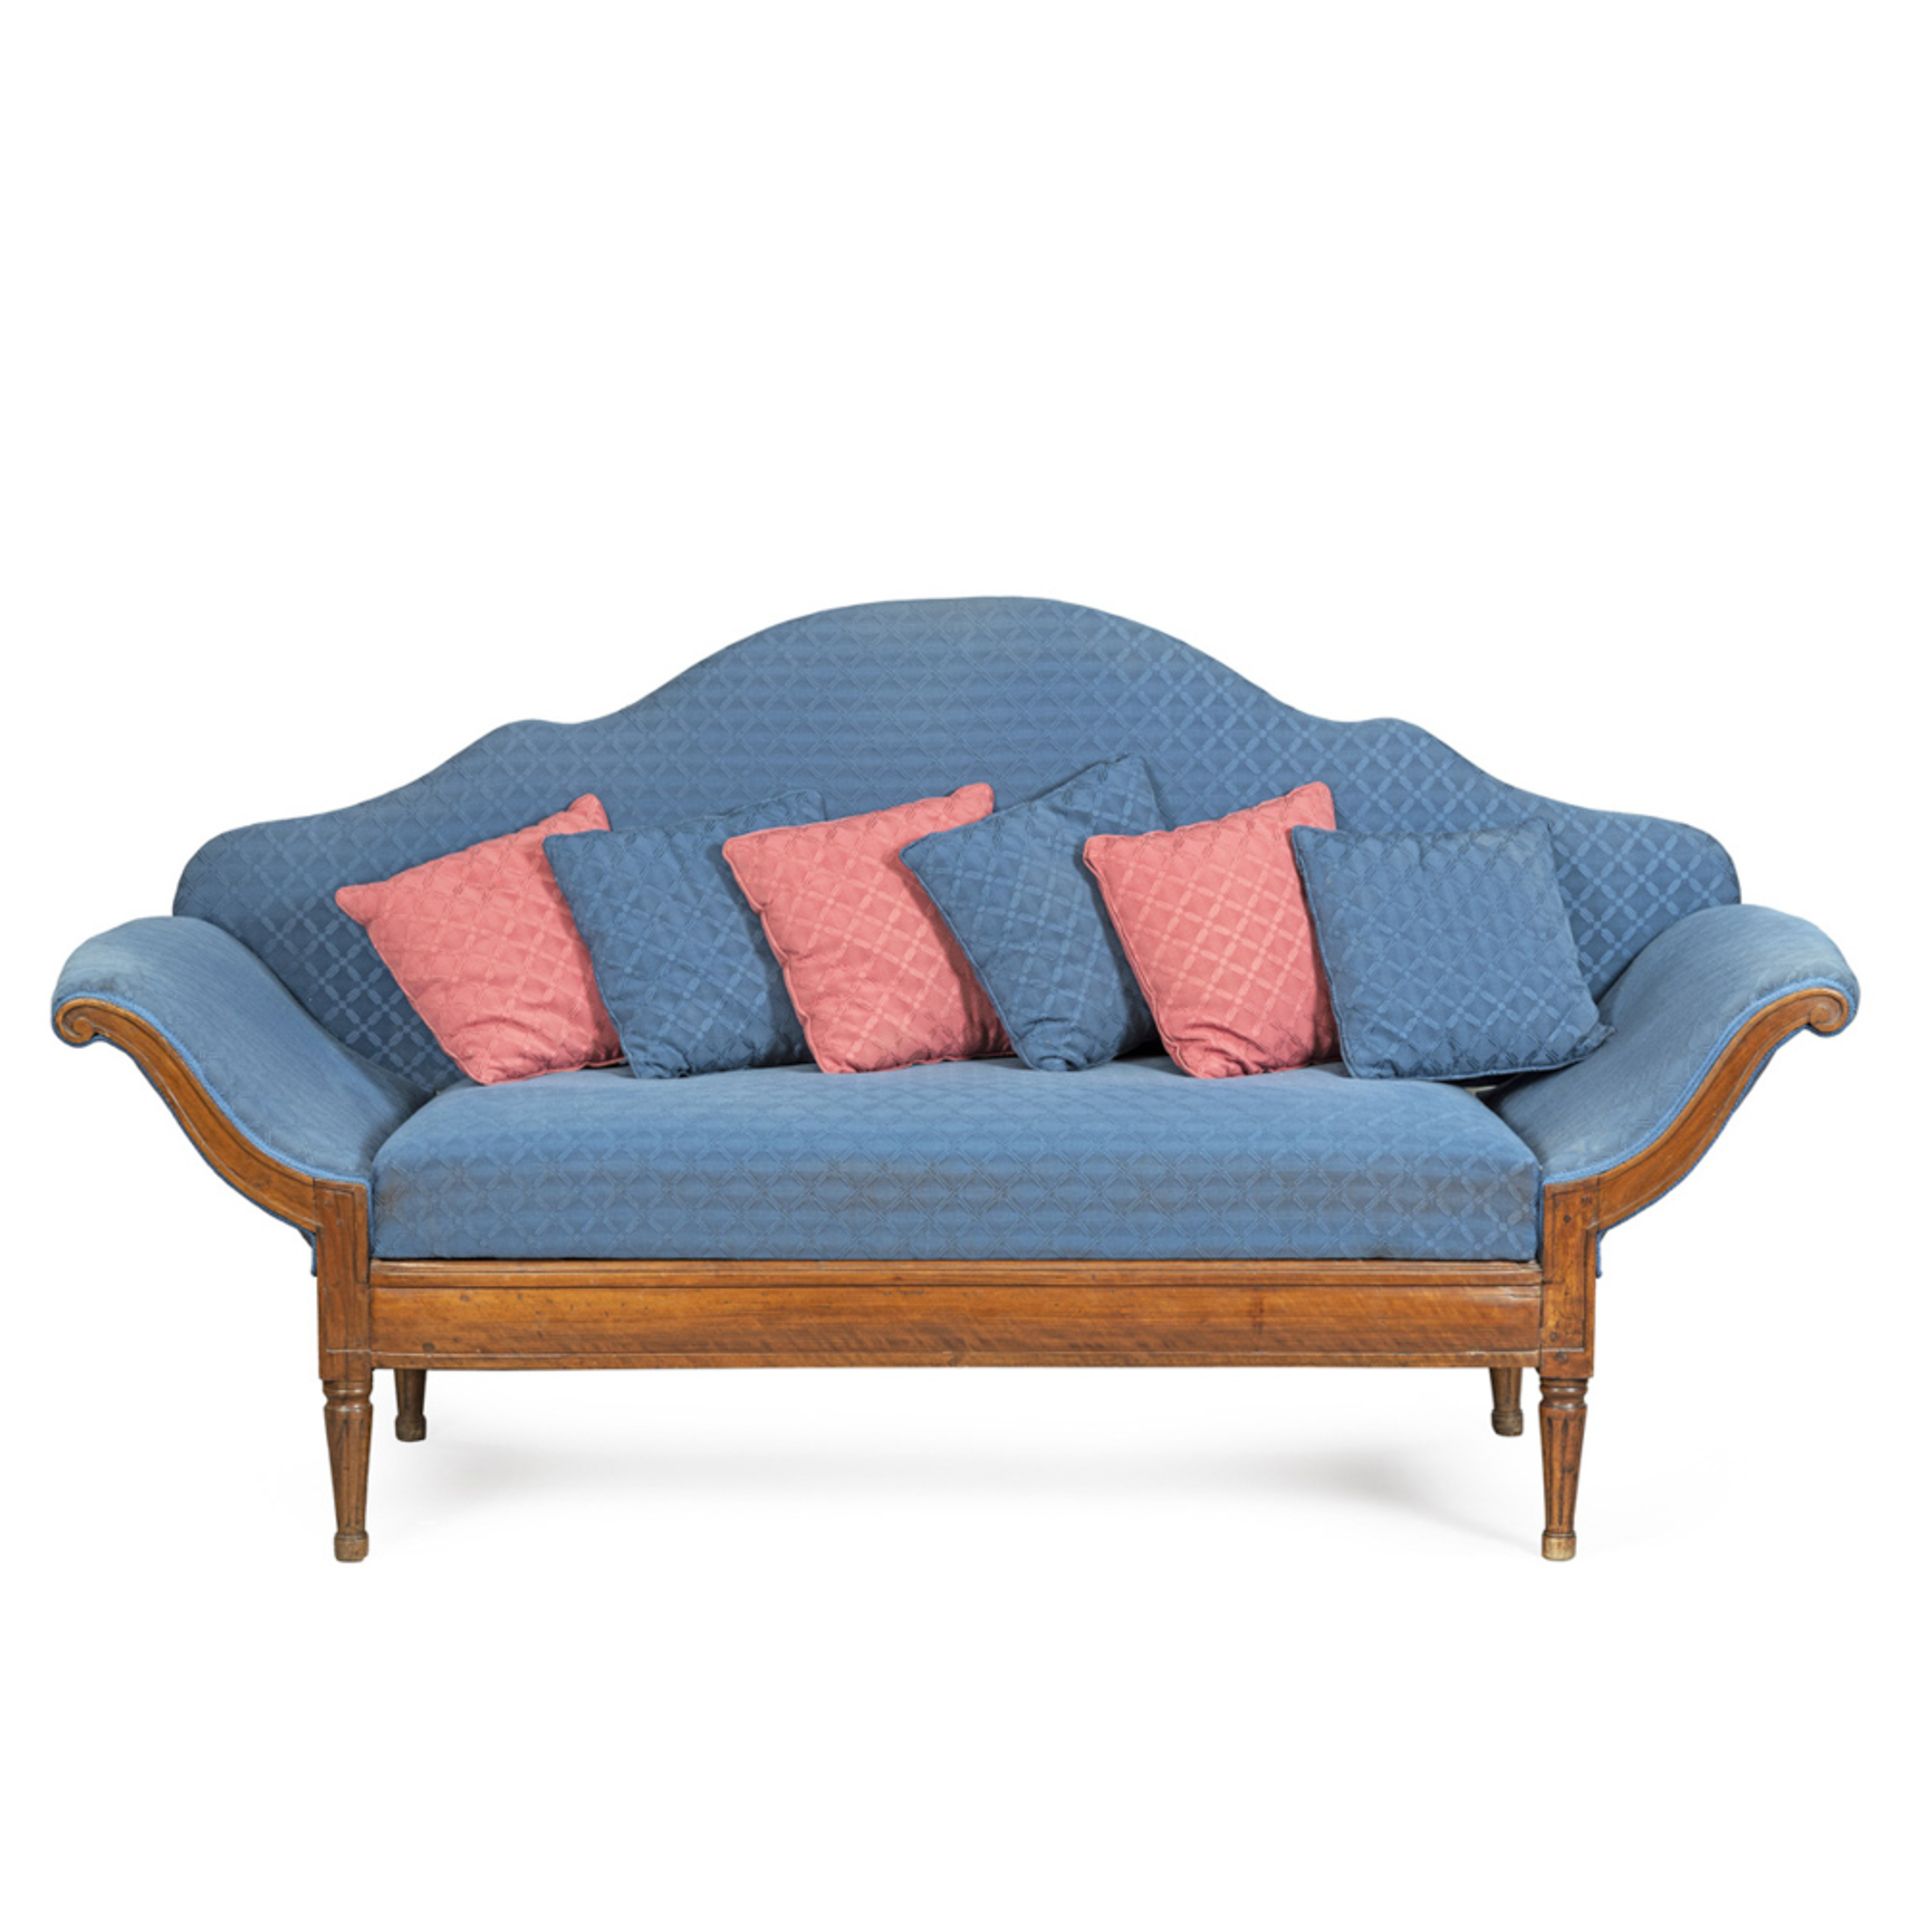 Walnut and fabric sofa